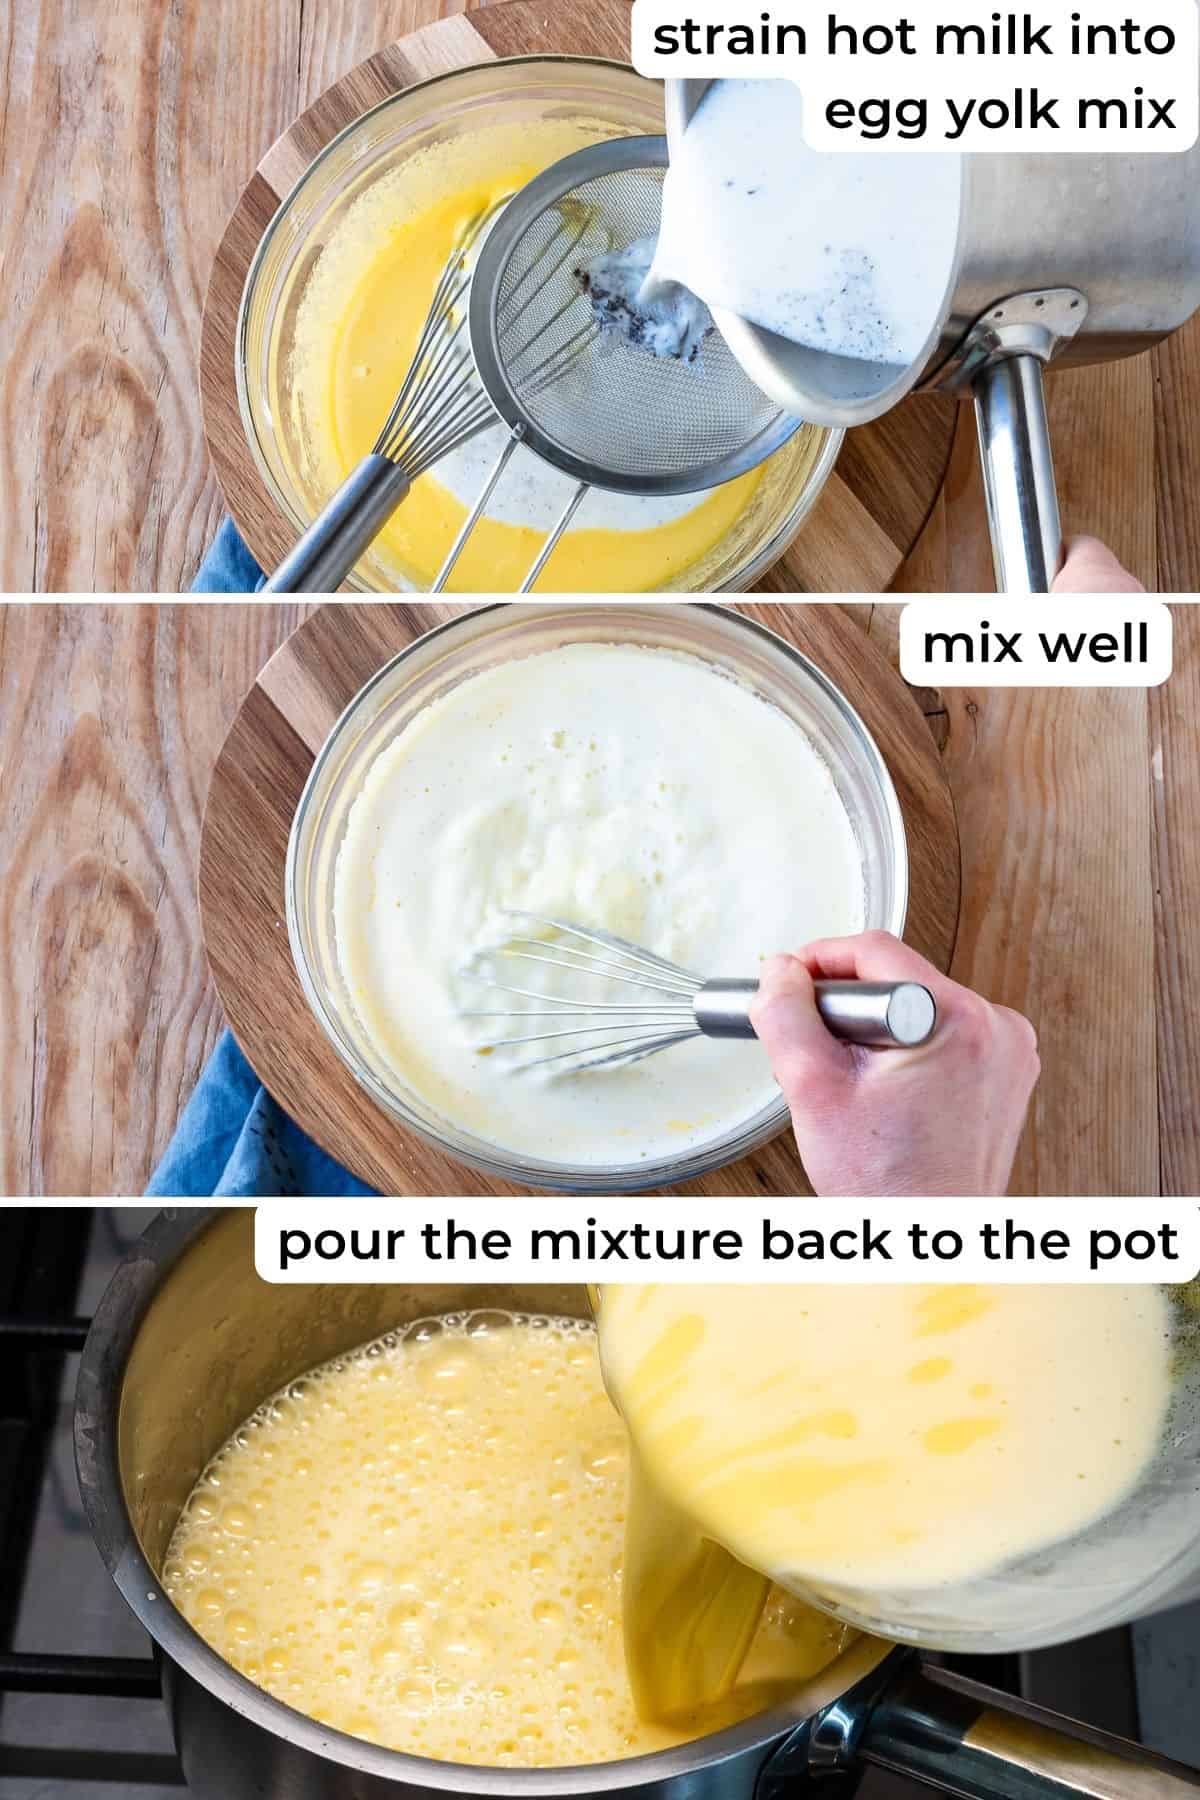 Mixing egg yolk mixture with hot milk.